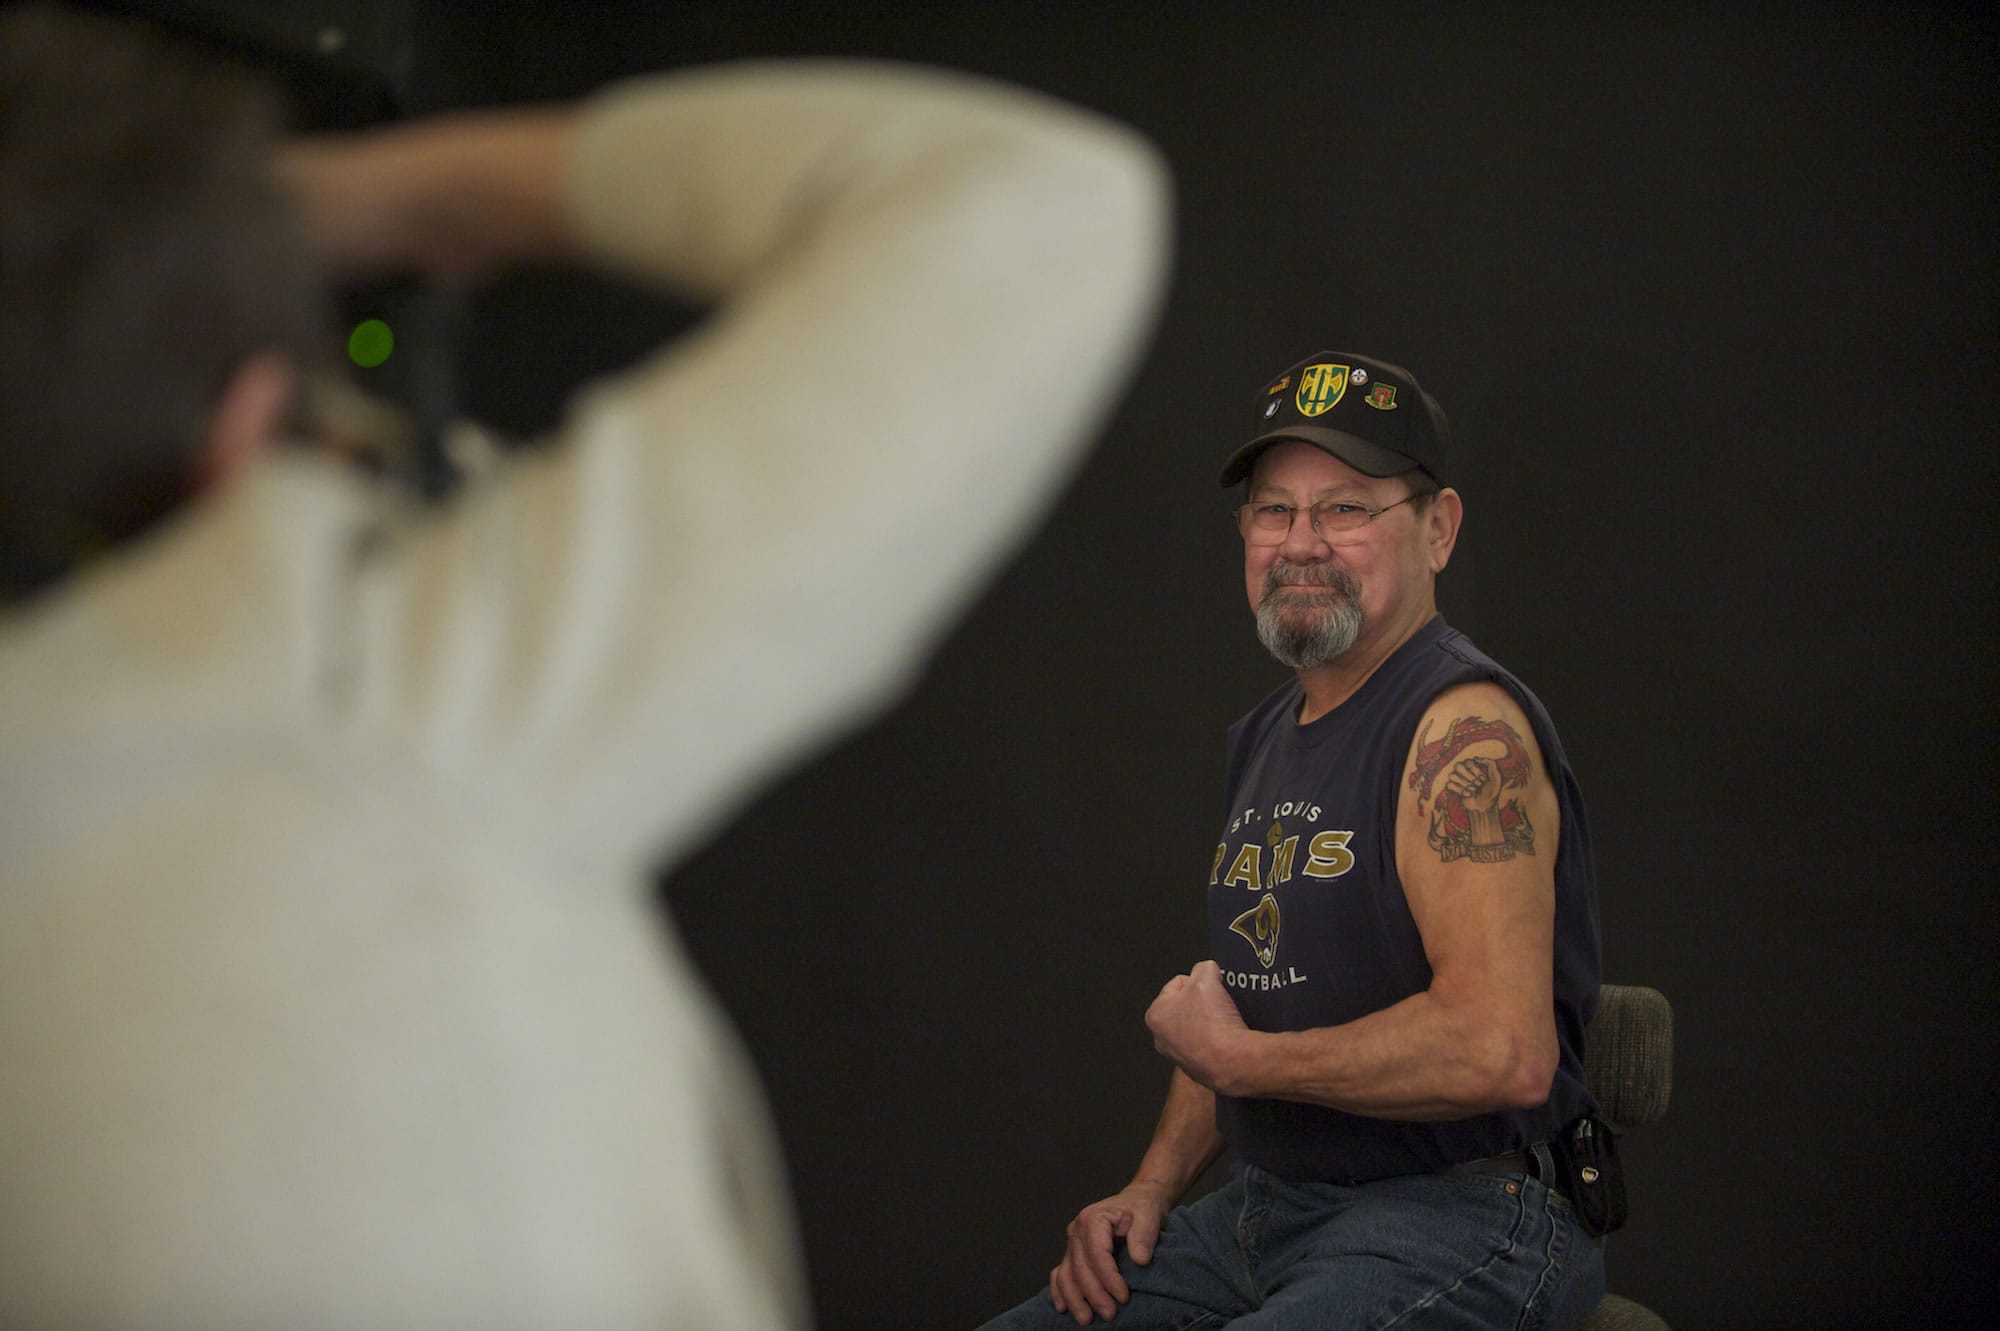 U.S. Army veteran Richard Alvarez flexes as Kate Singh takes a photograph for an exhibit of military-related tattoos.